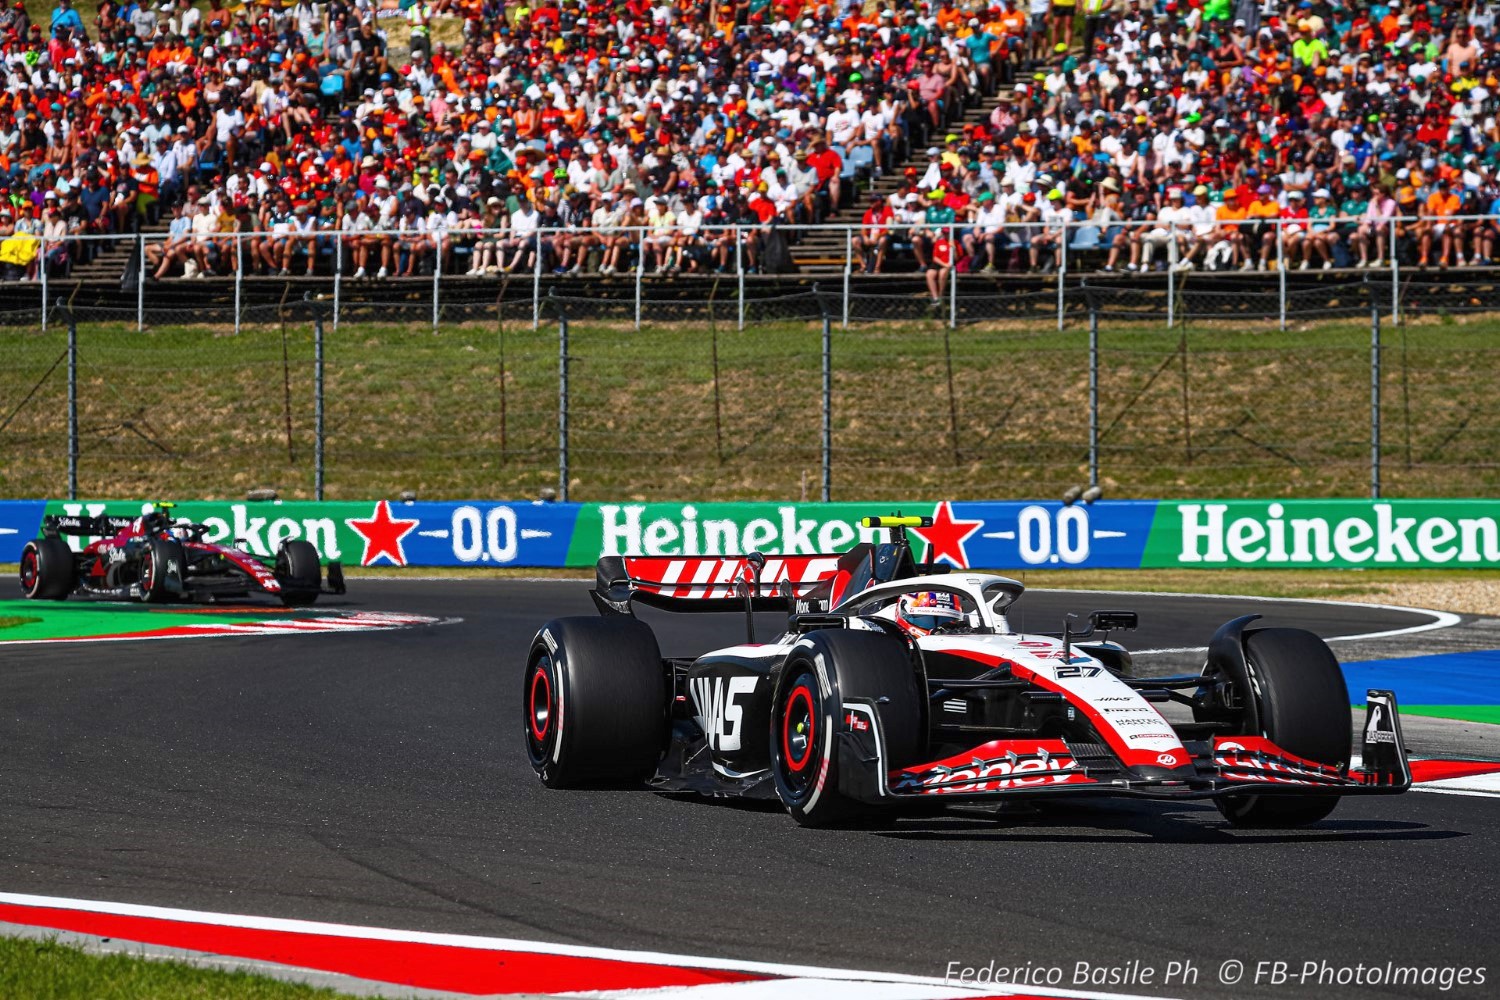 #27 Nico Hulkemberg, (GER) Haas F1 Team during the Hungarian GP, Budapest 20-23 July 2023 at the Hungaroring, Formula 1 World championship 2023.